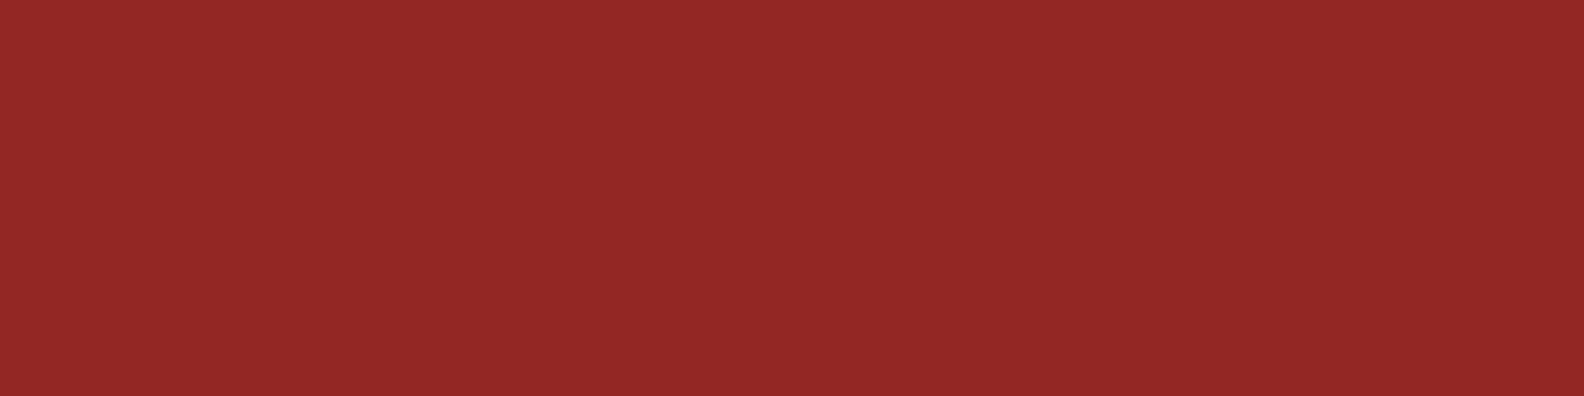 1584x396 Vivid Auburn Solid Color Background